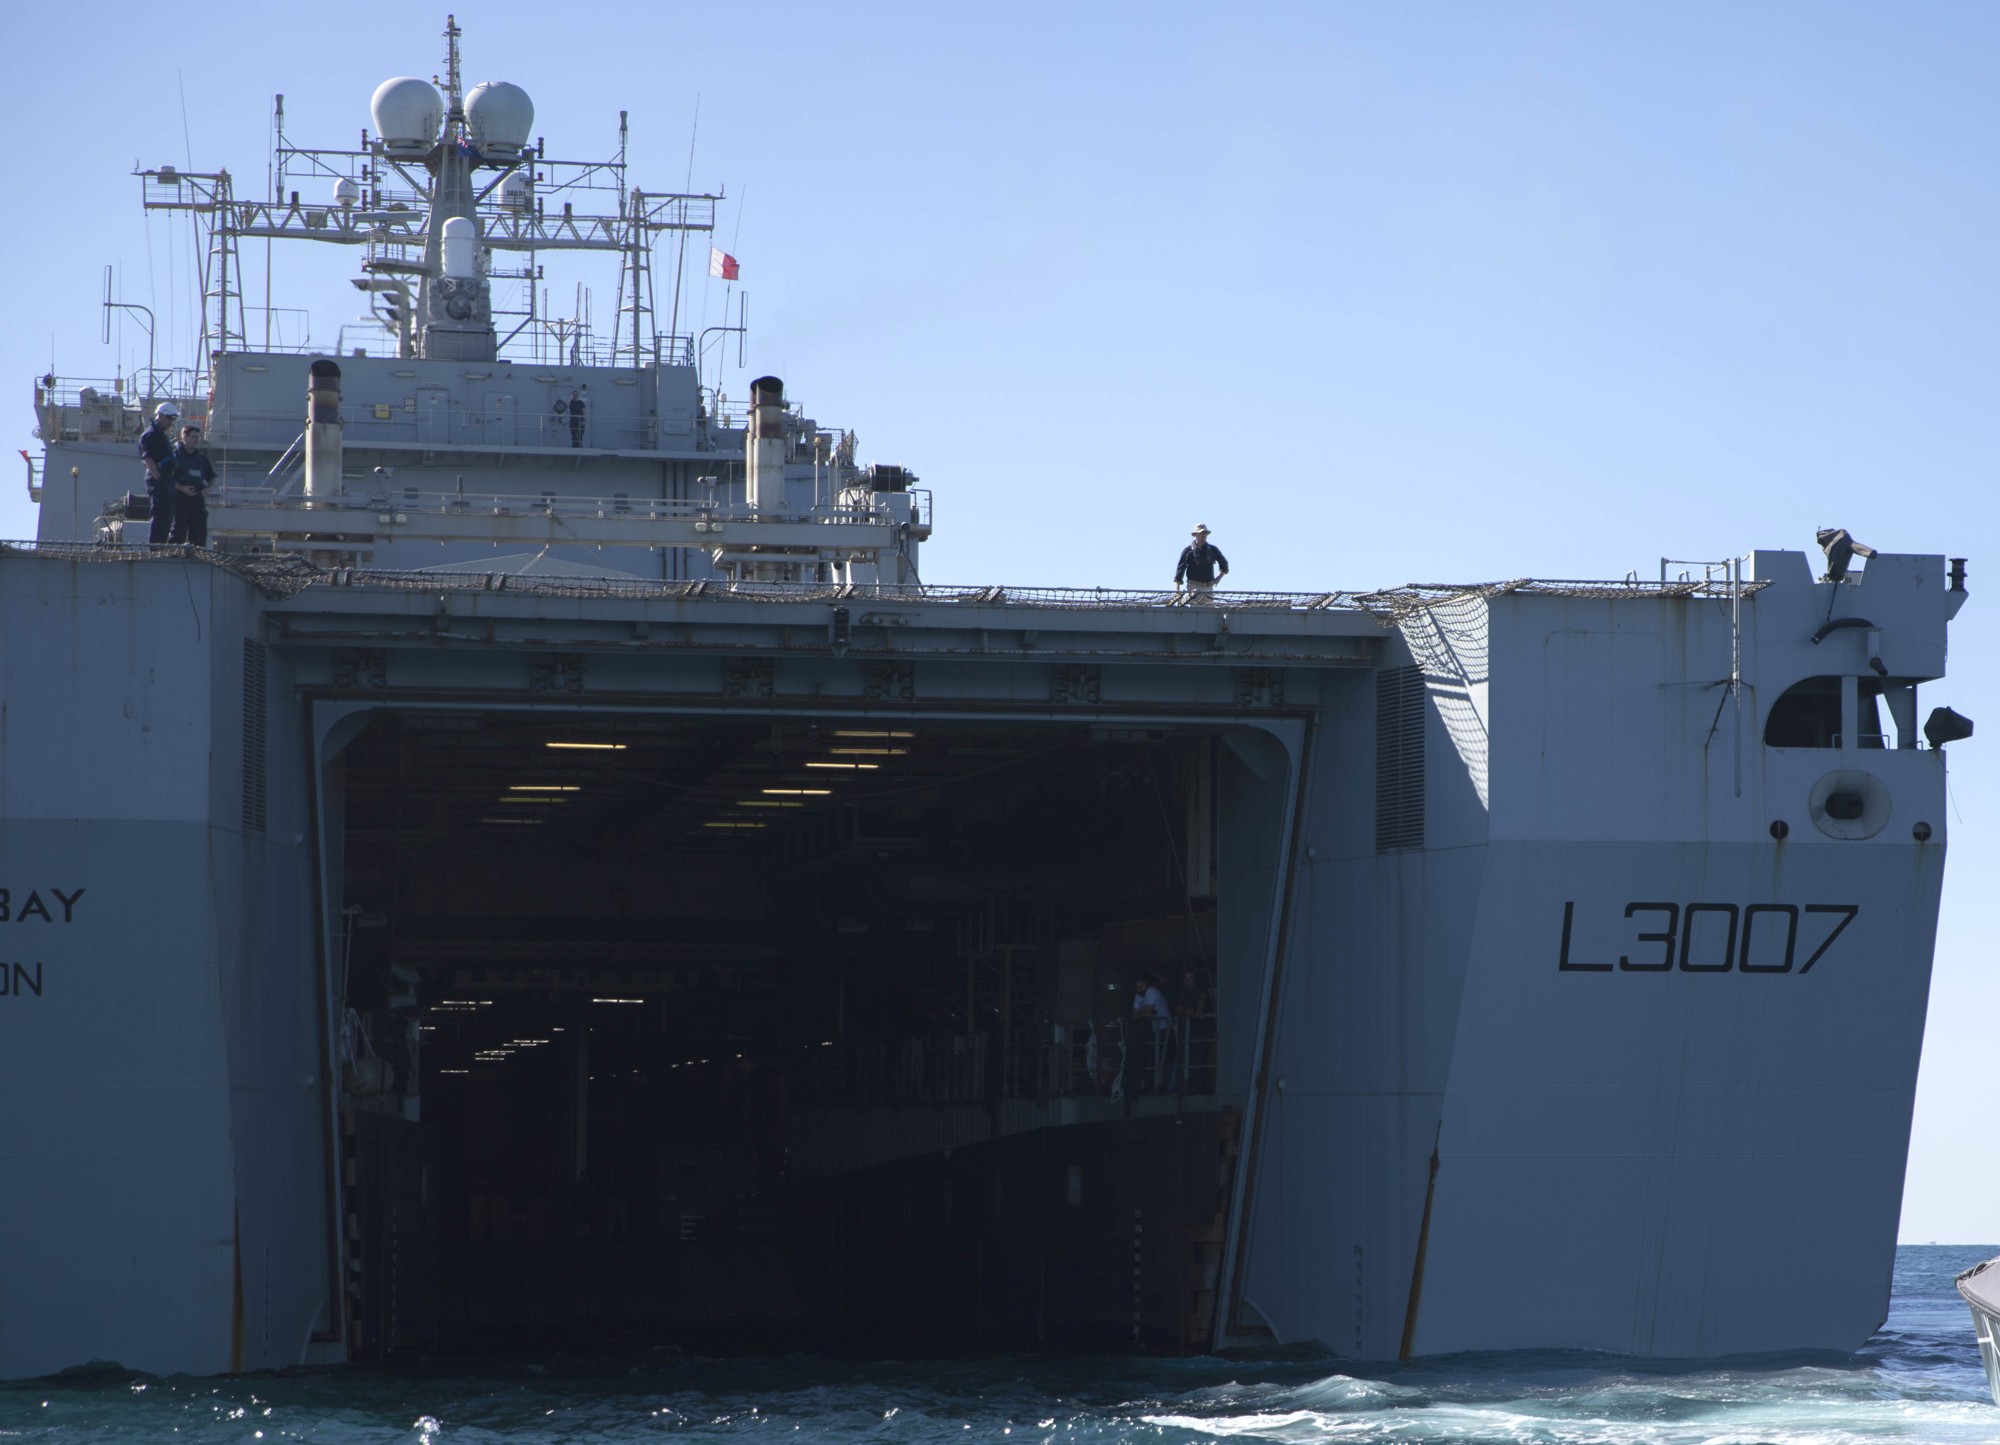 l-3007 rfa lyme bay dock landing ship royal fleet auxilary navy 45